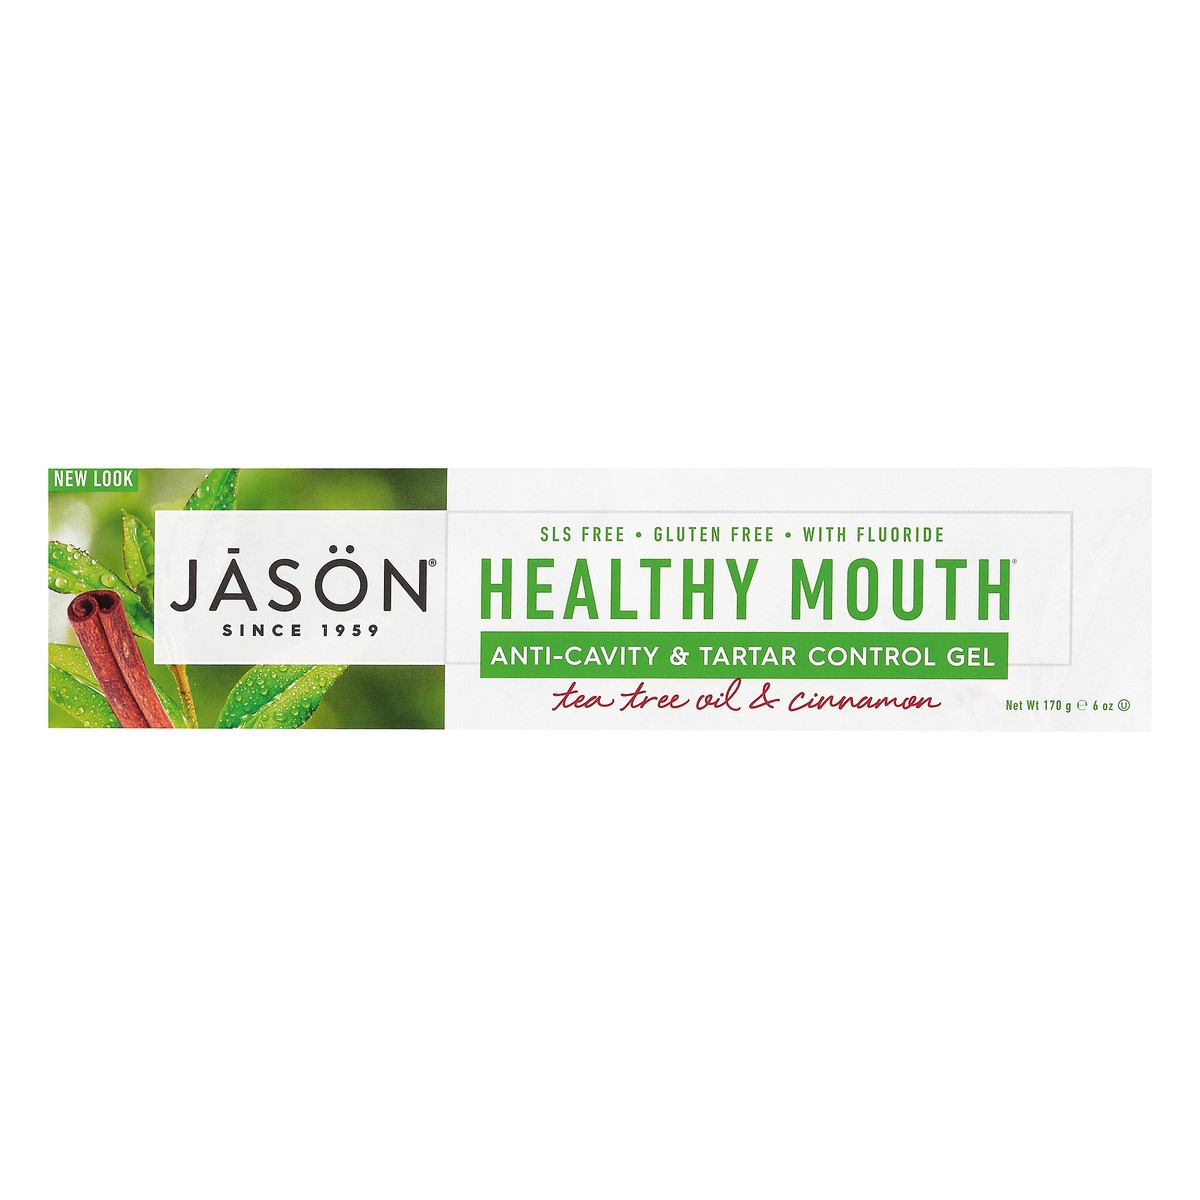 slide 6 of 8, Jason JĀSON Healthy Mouth Tea Tree Oil & Cinnamon Anti-Cavity & Tartar Control Gel 6 oz. Box, 6 oz